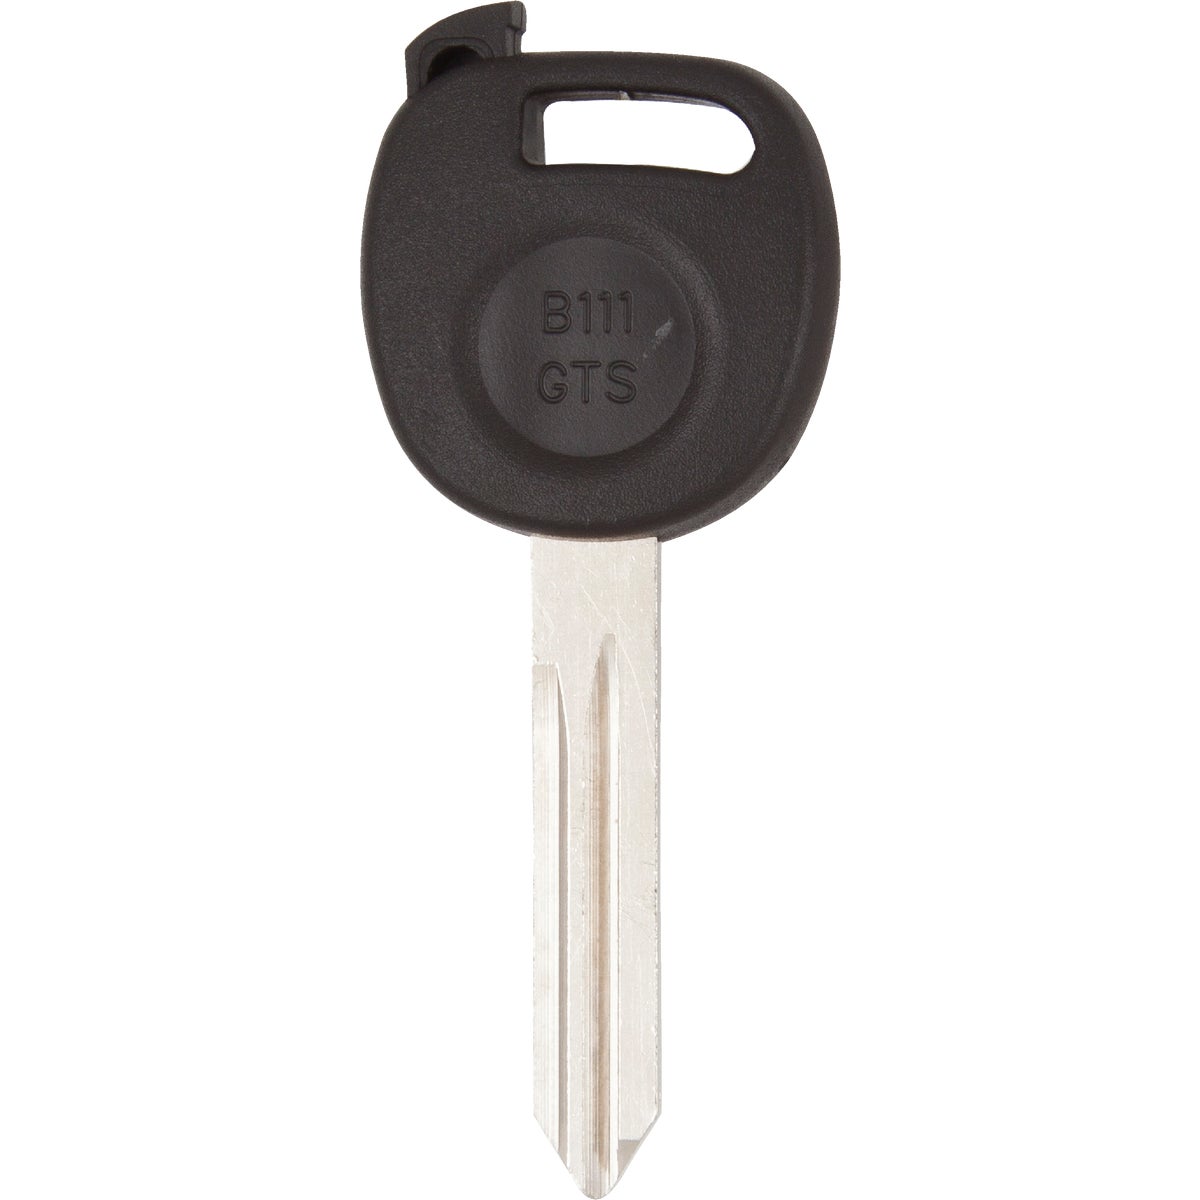 ILCO Look Alike Key Shell For GM Models, B111-GTS